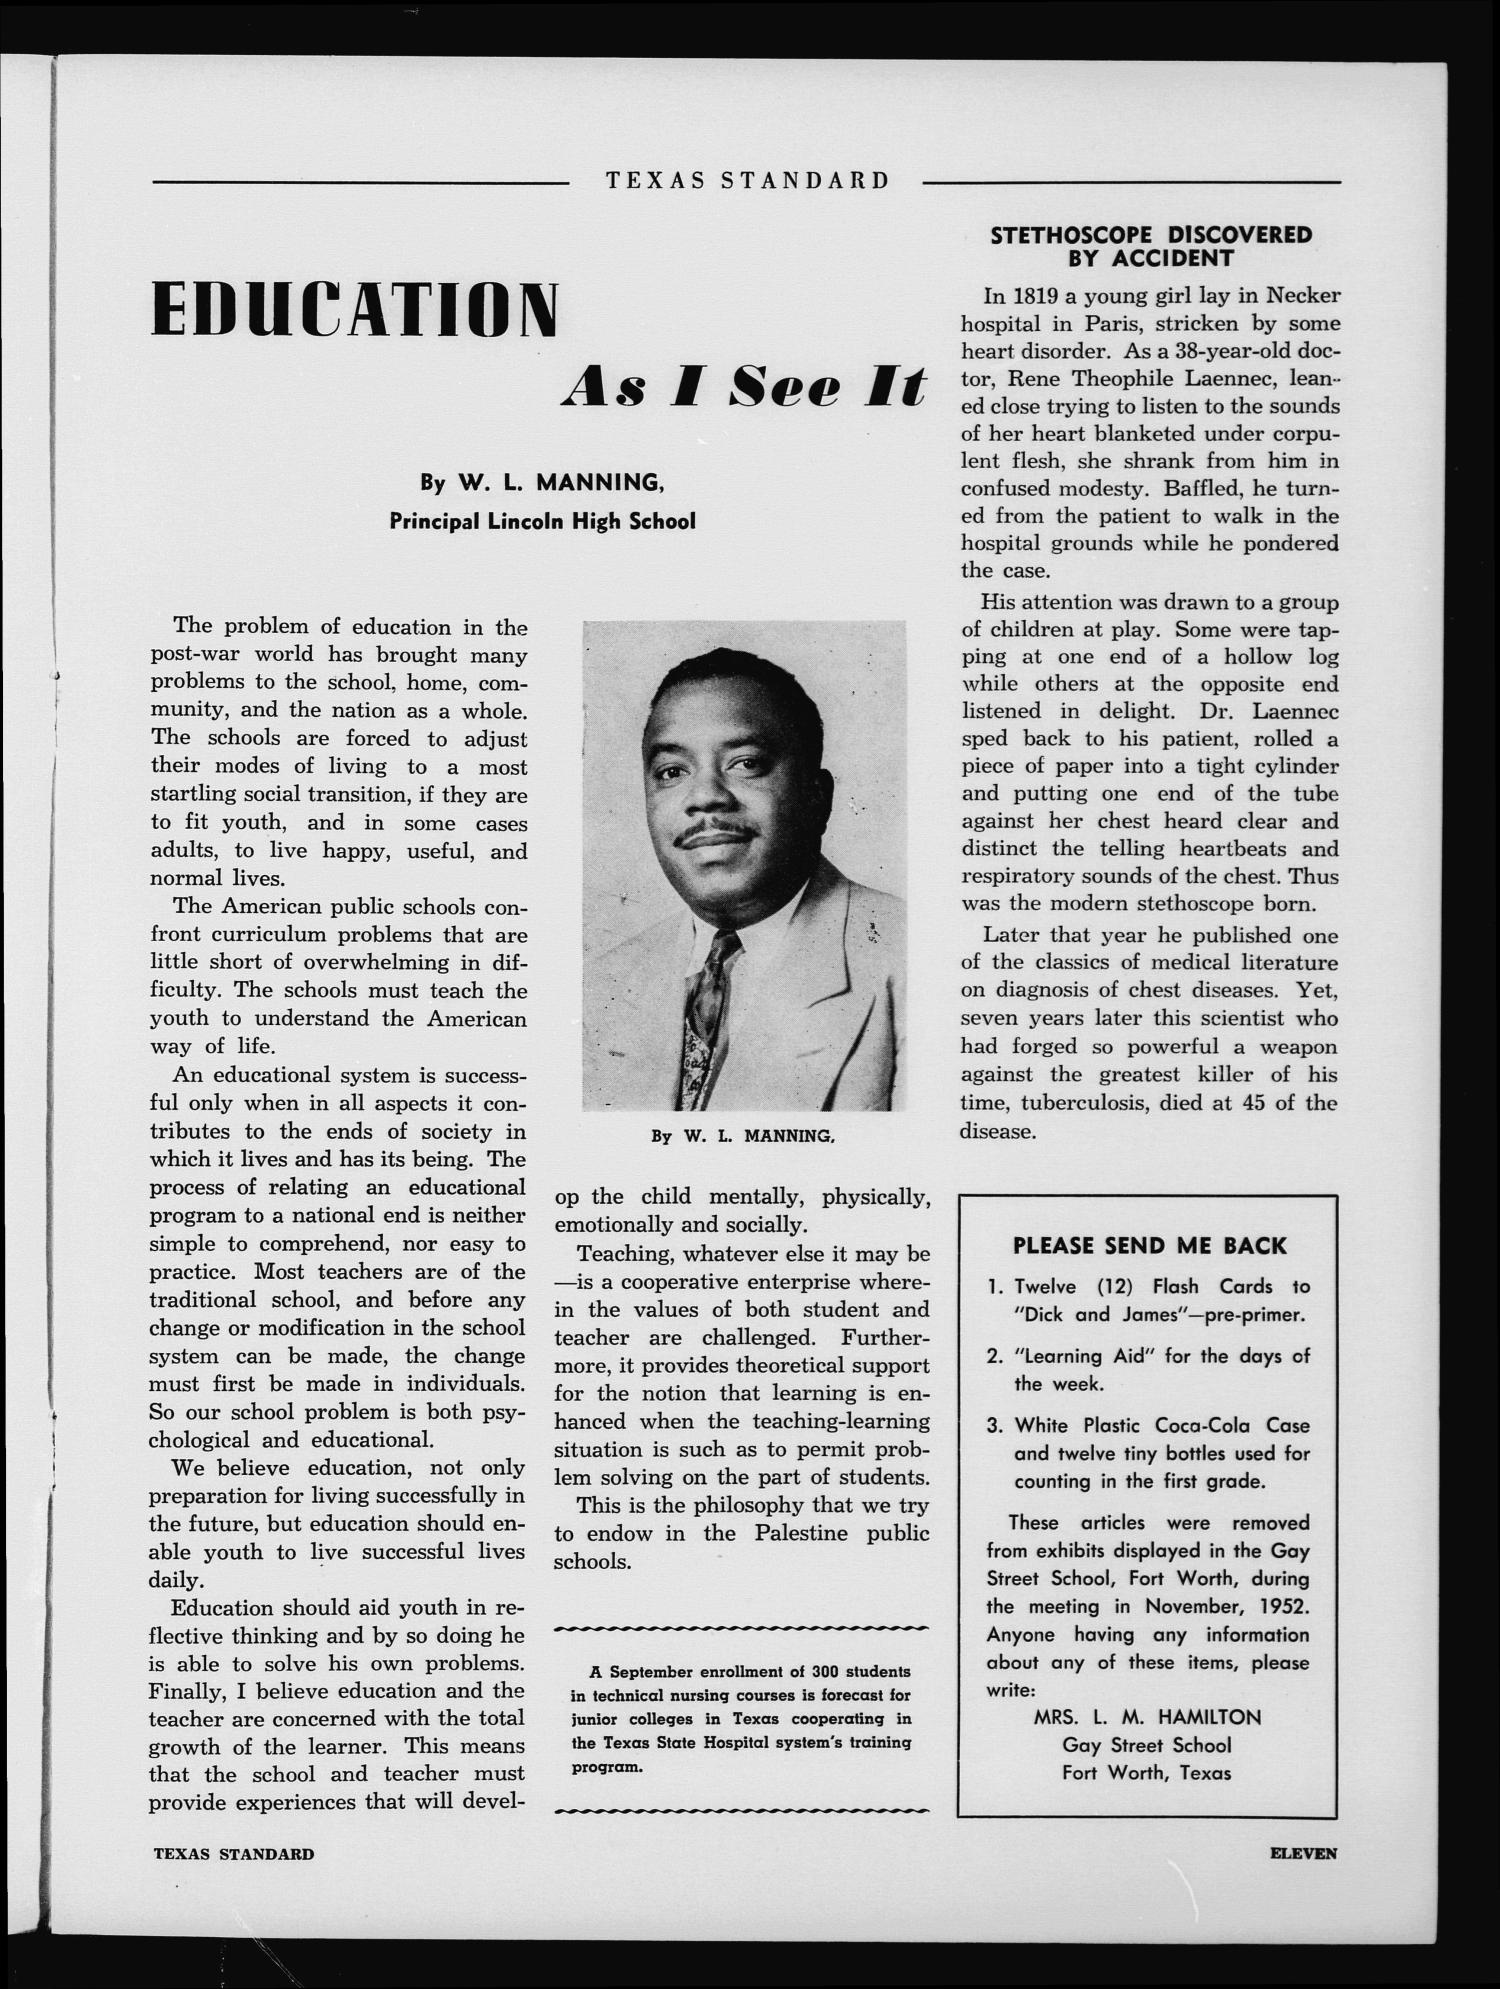 The Texas Standard, Volume 27, Number 1, January-February 1953
                                                
                                                    11
                                                